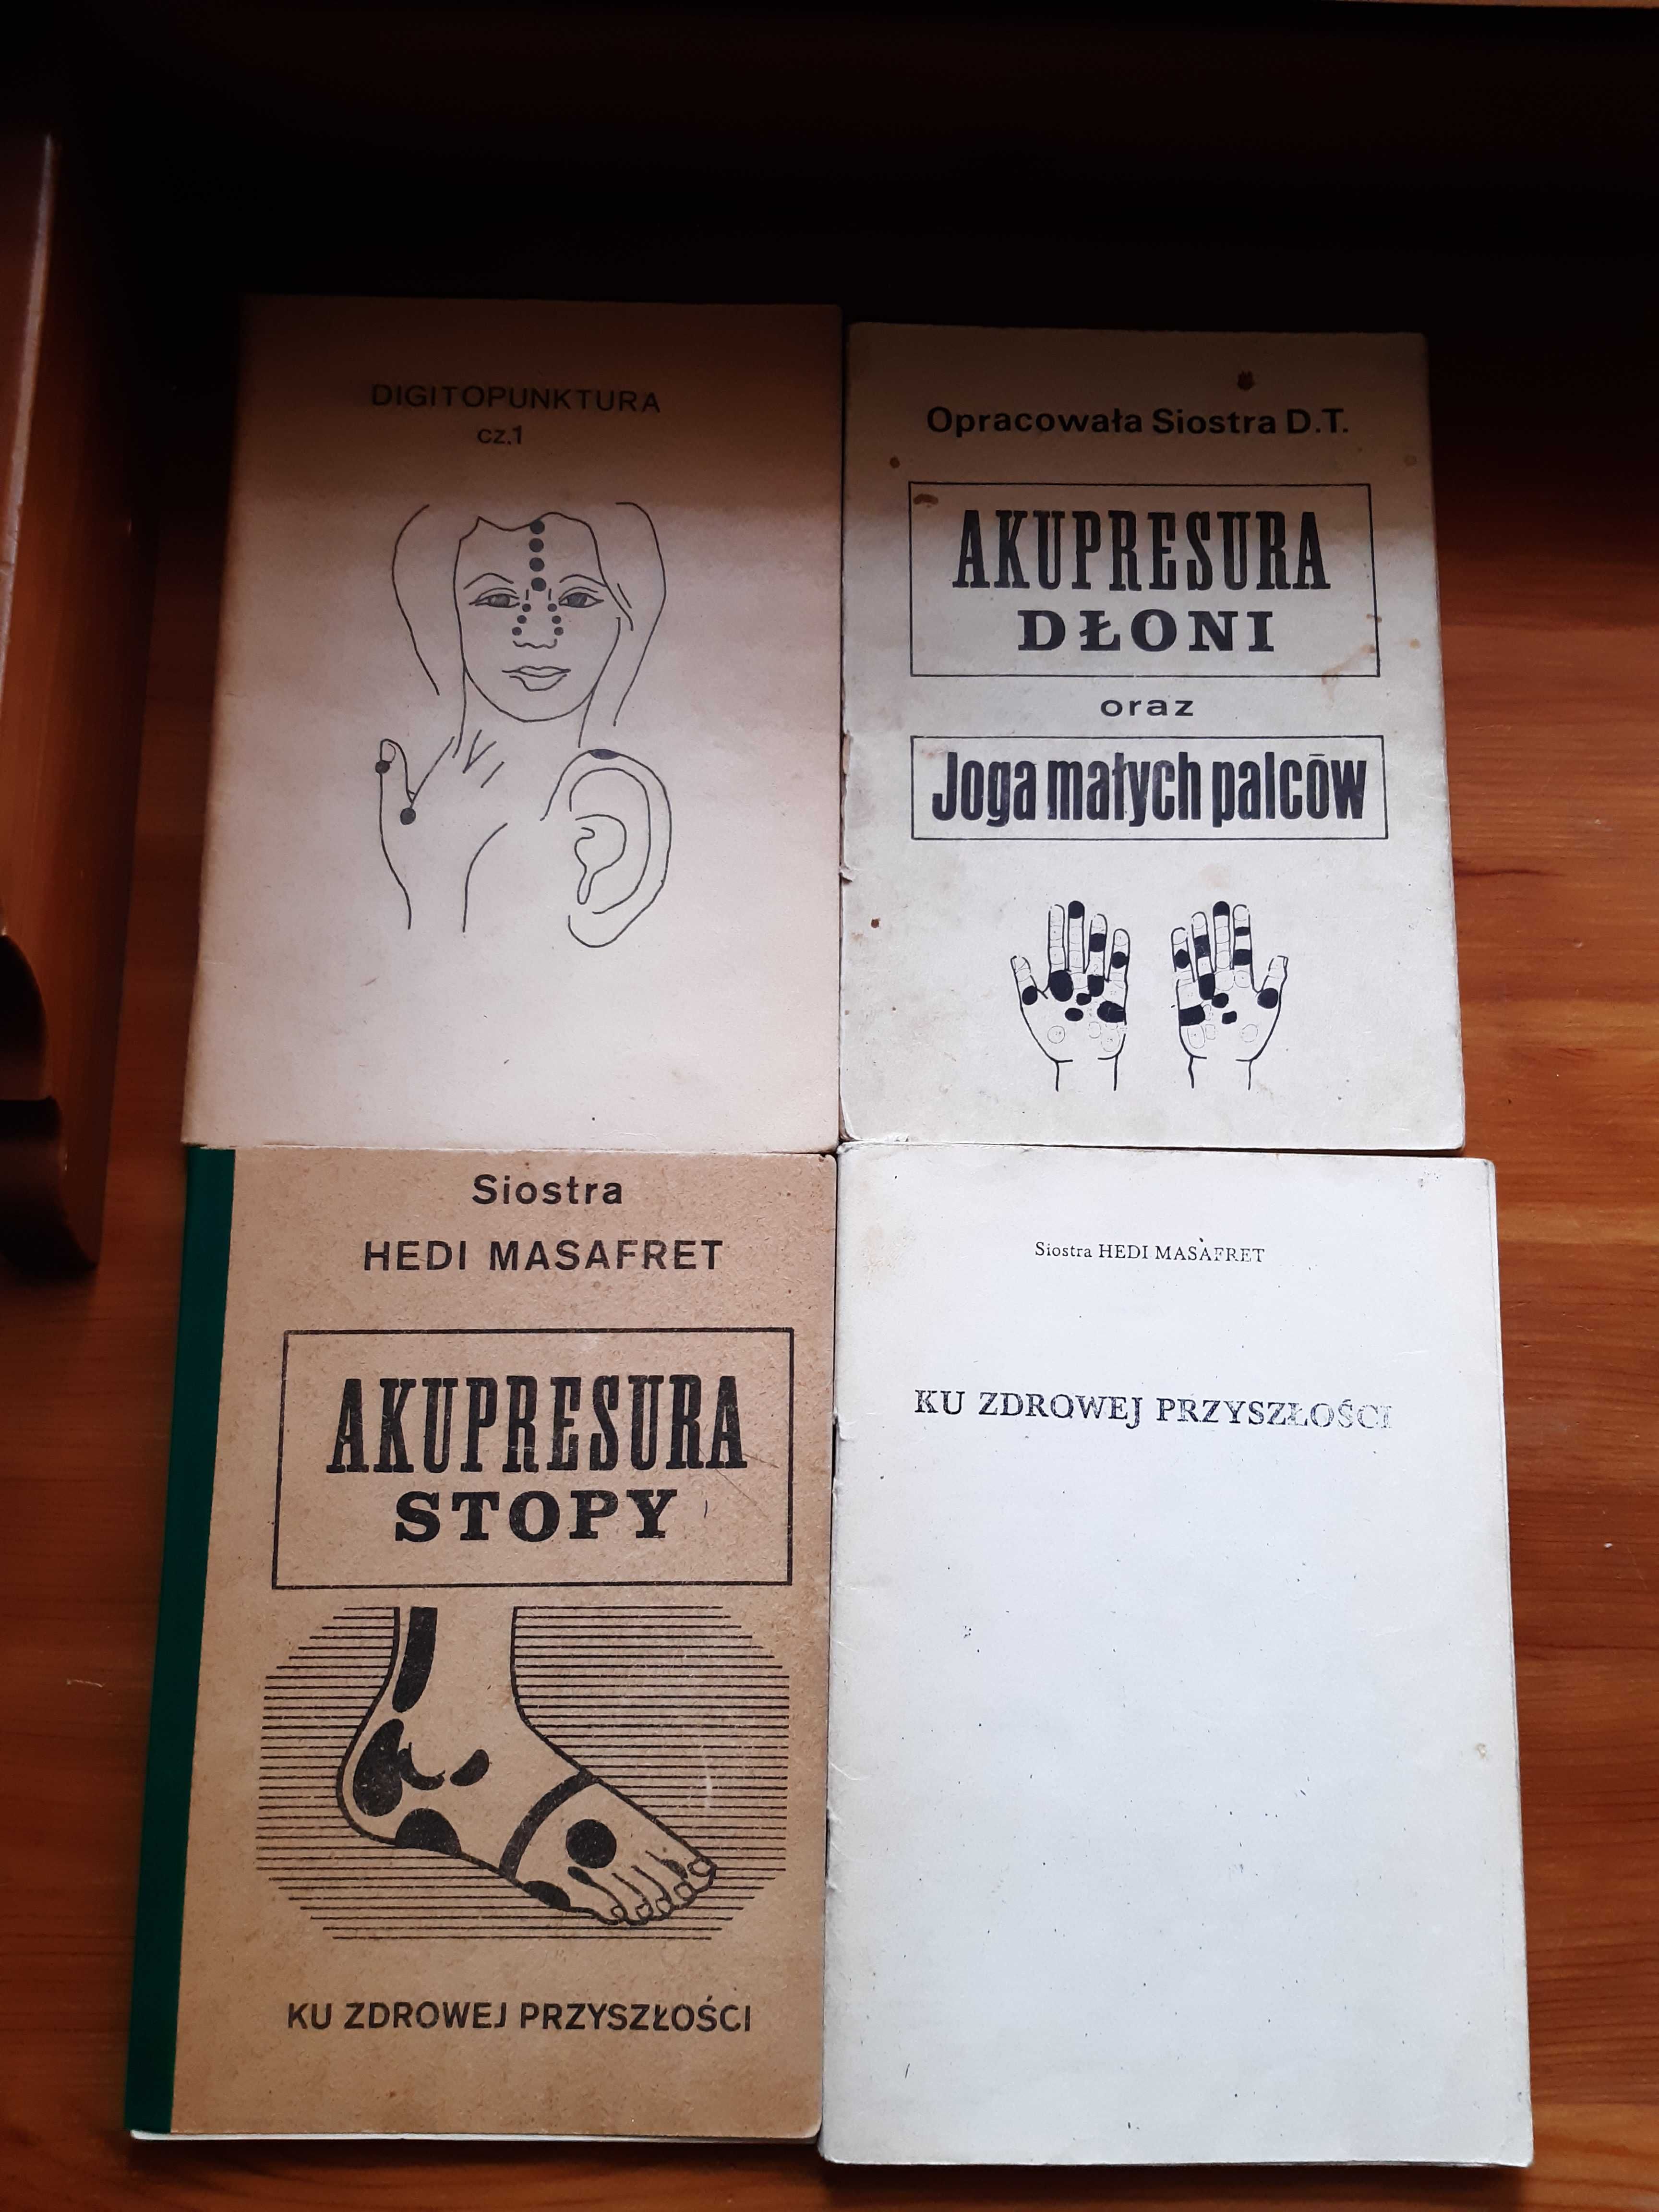 Akupresura digitopunktura 4 książki zestaw